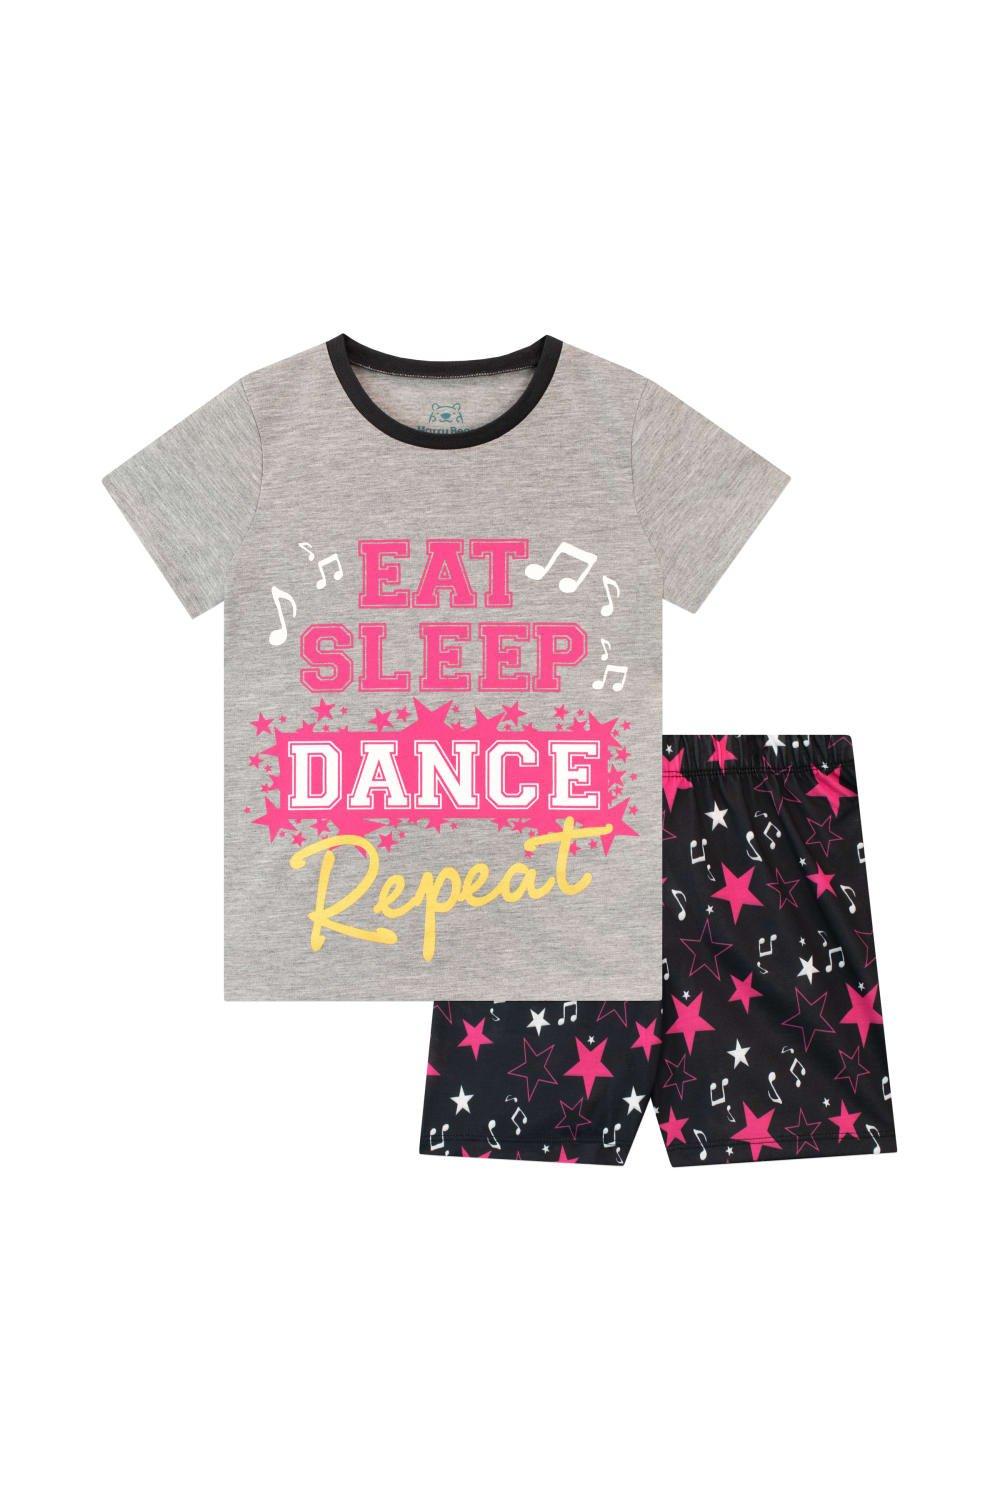 Eat Sleep Dance Repeat Short Pyjamas